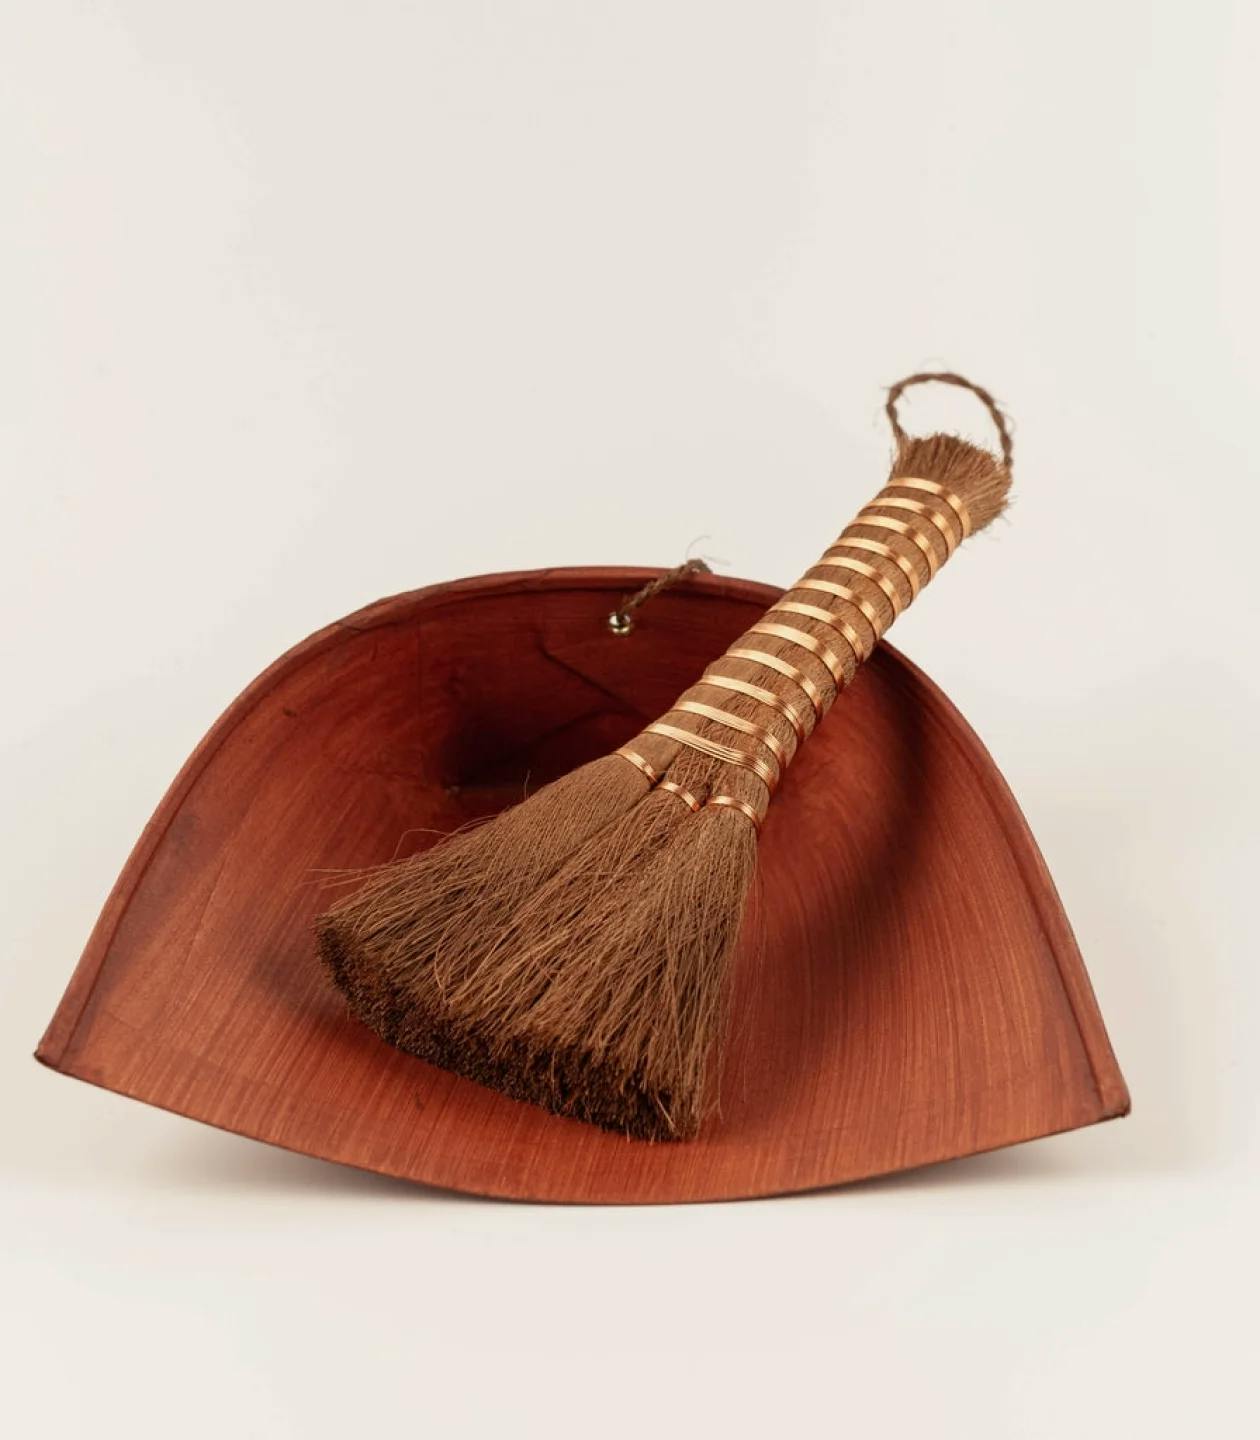 Image of a handmade hemp palm brush